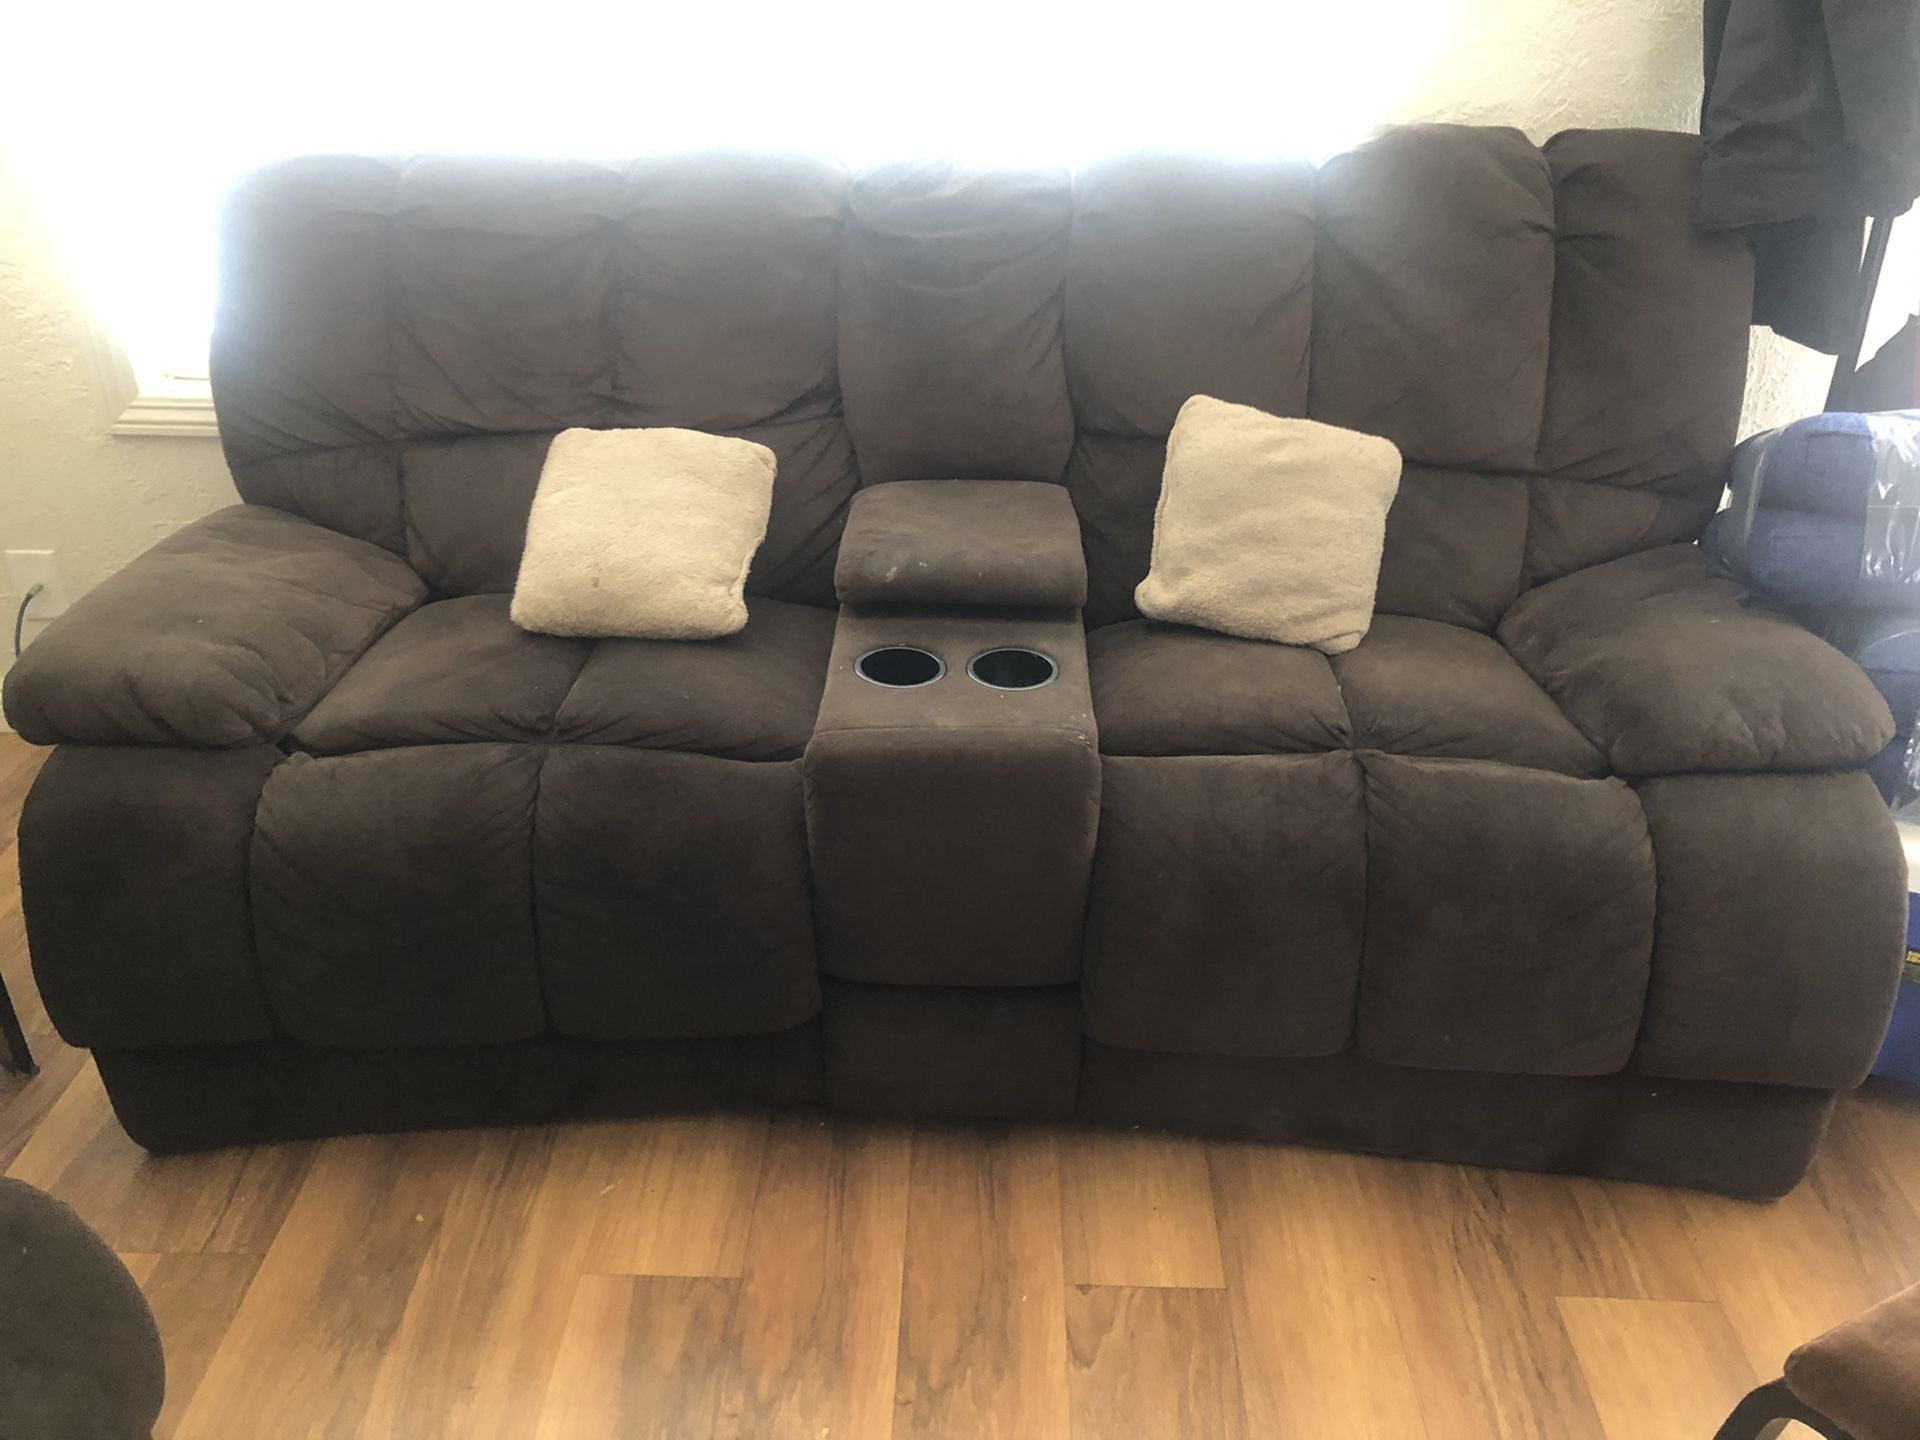 Free sofa and love seat